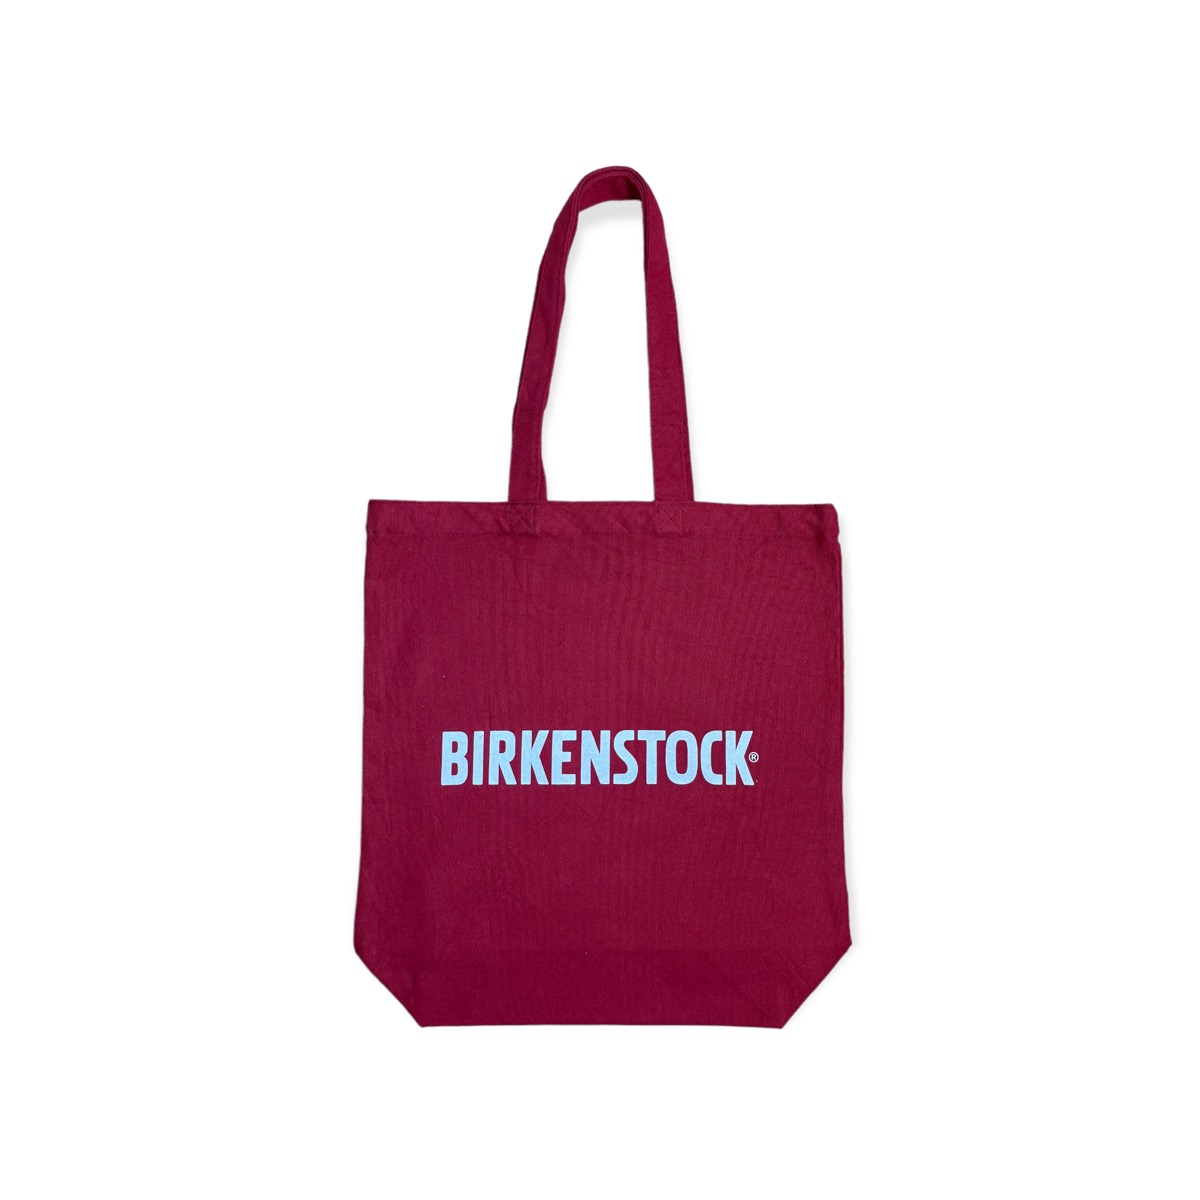 Birkenstock Tote Bag - 1